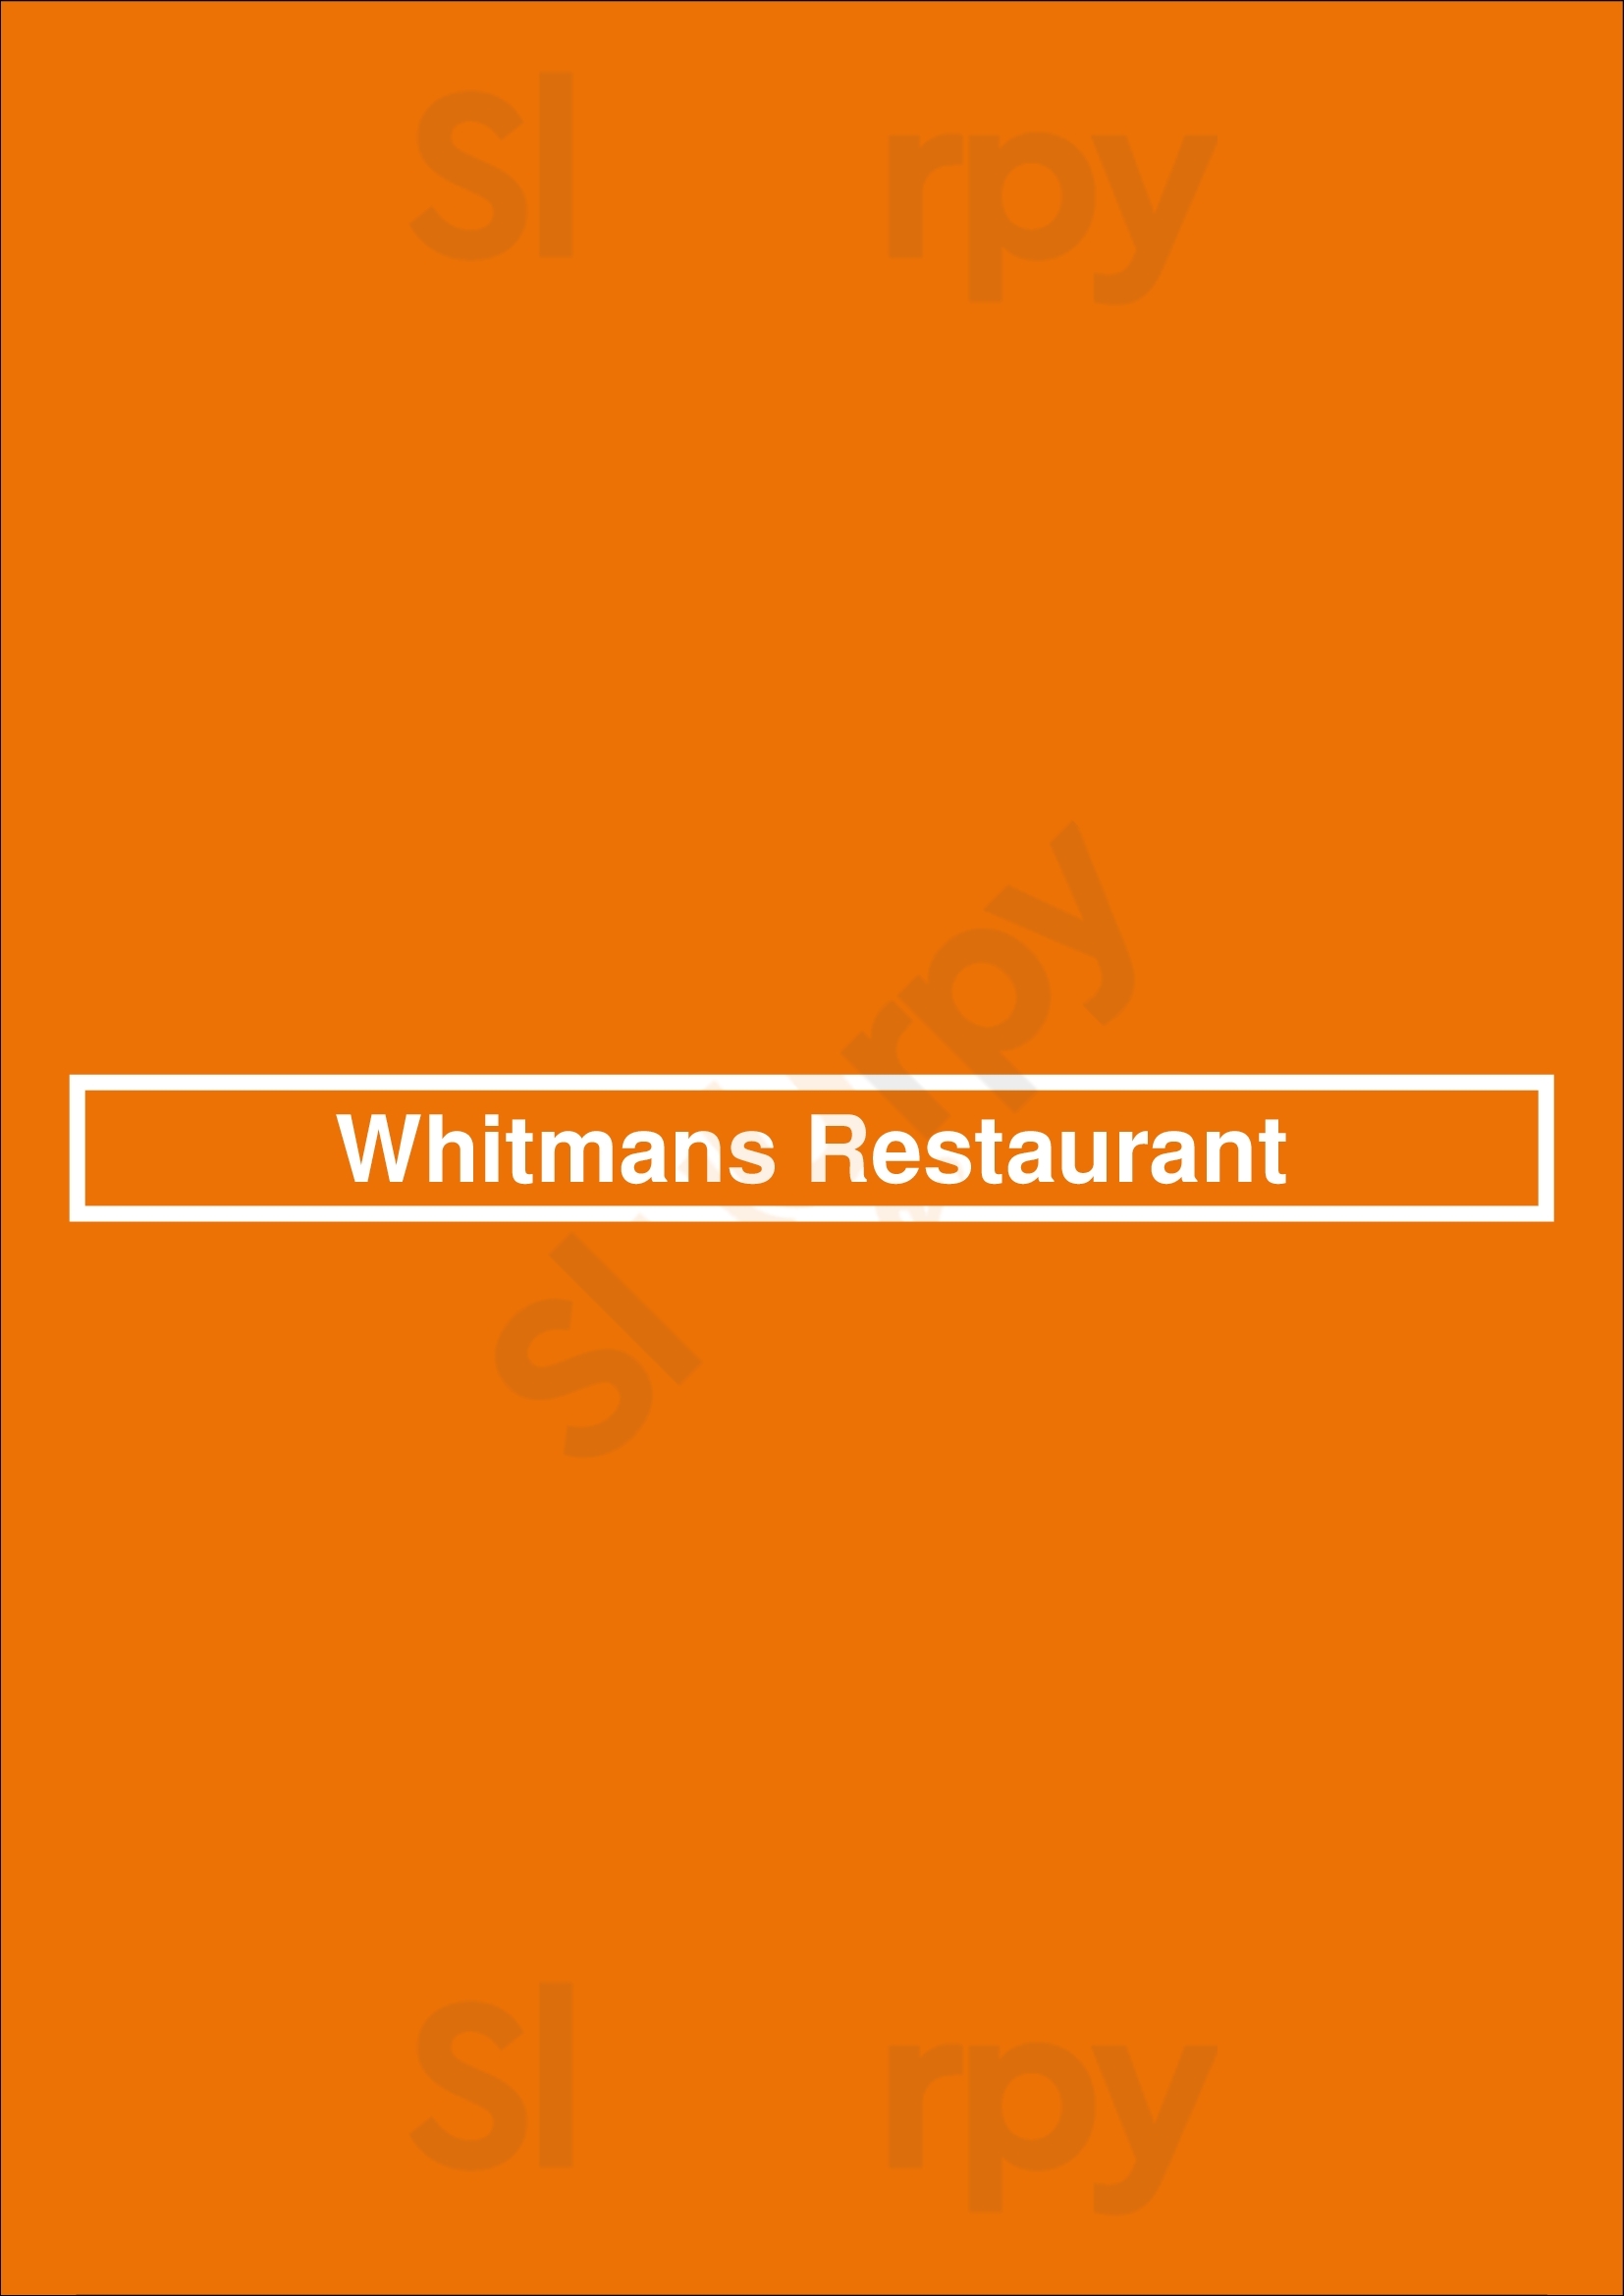 Whitmans Restaurant New York City Menu - 1